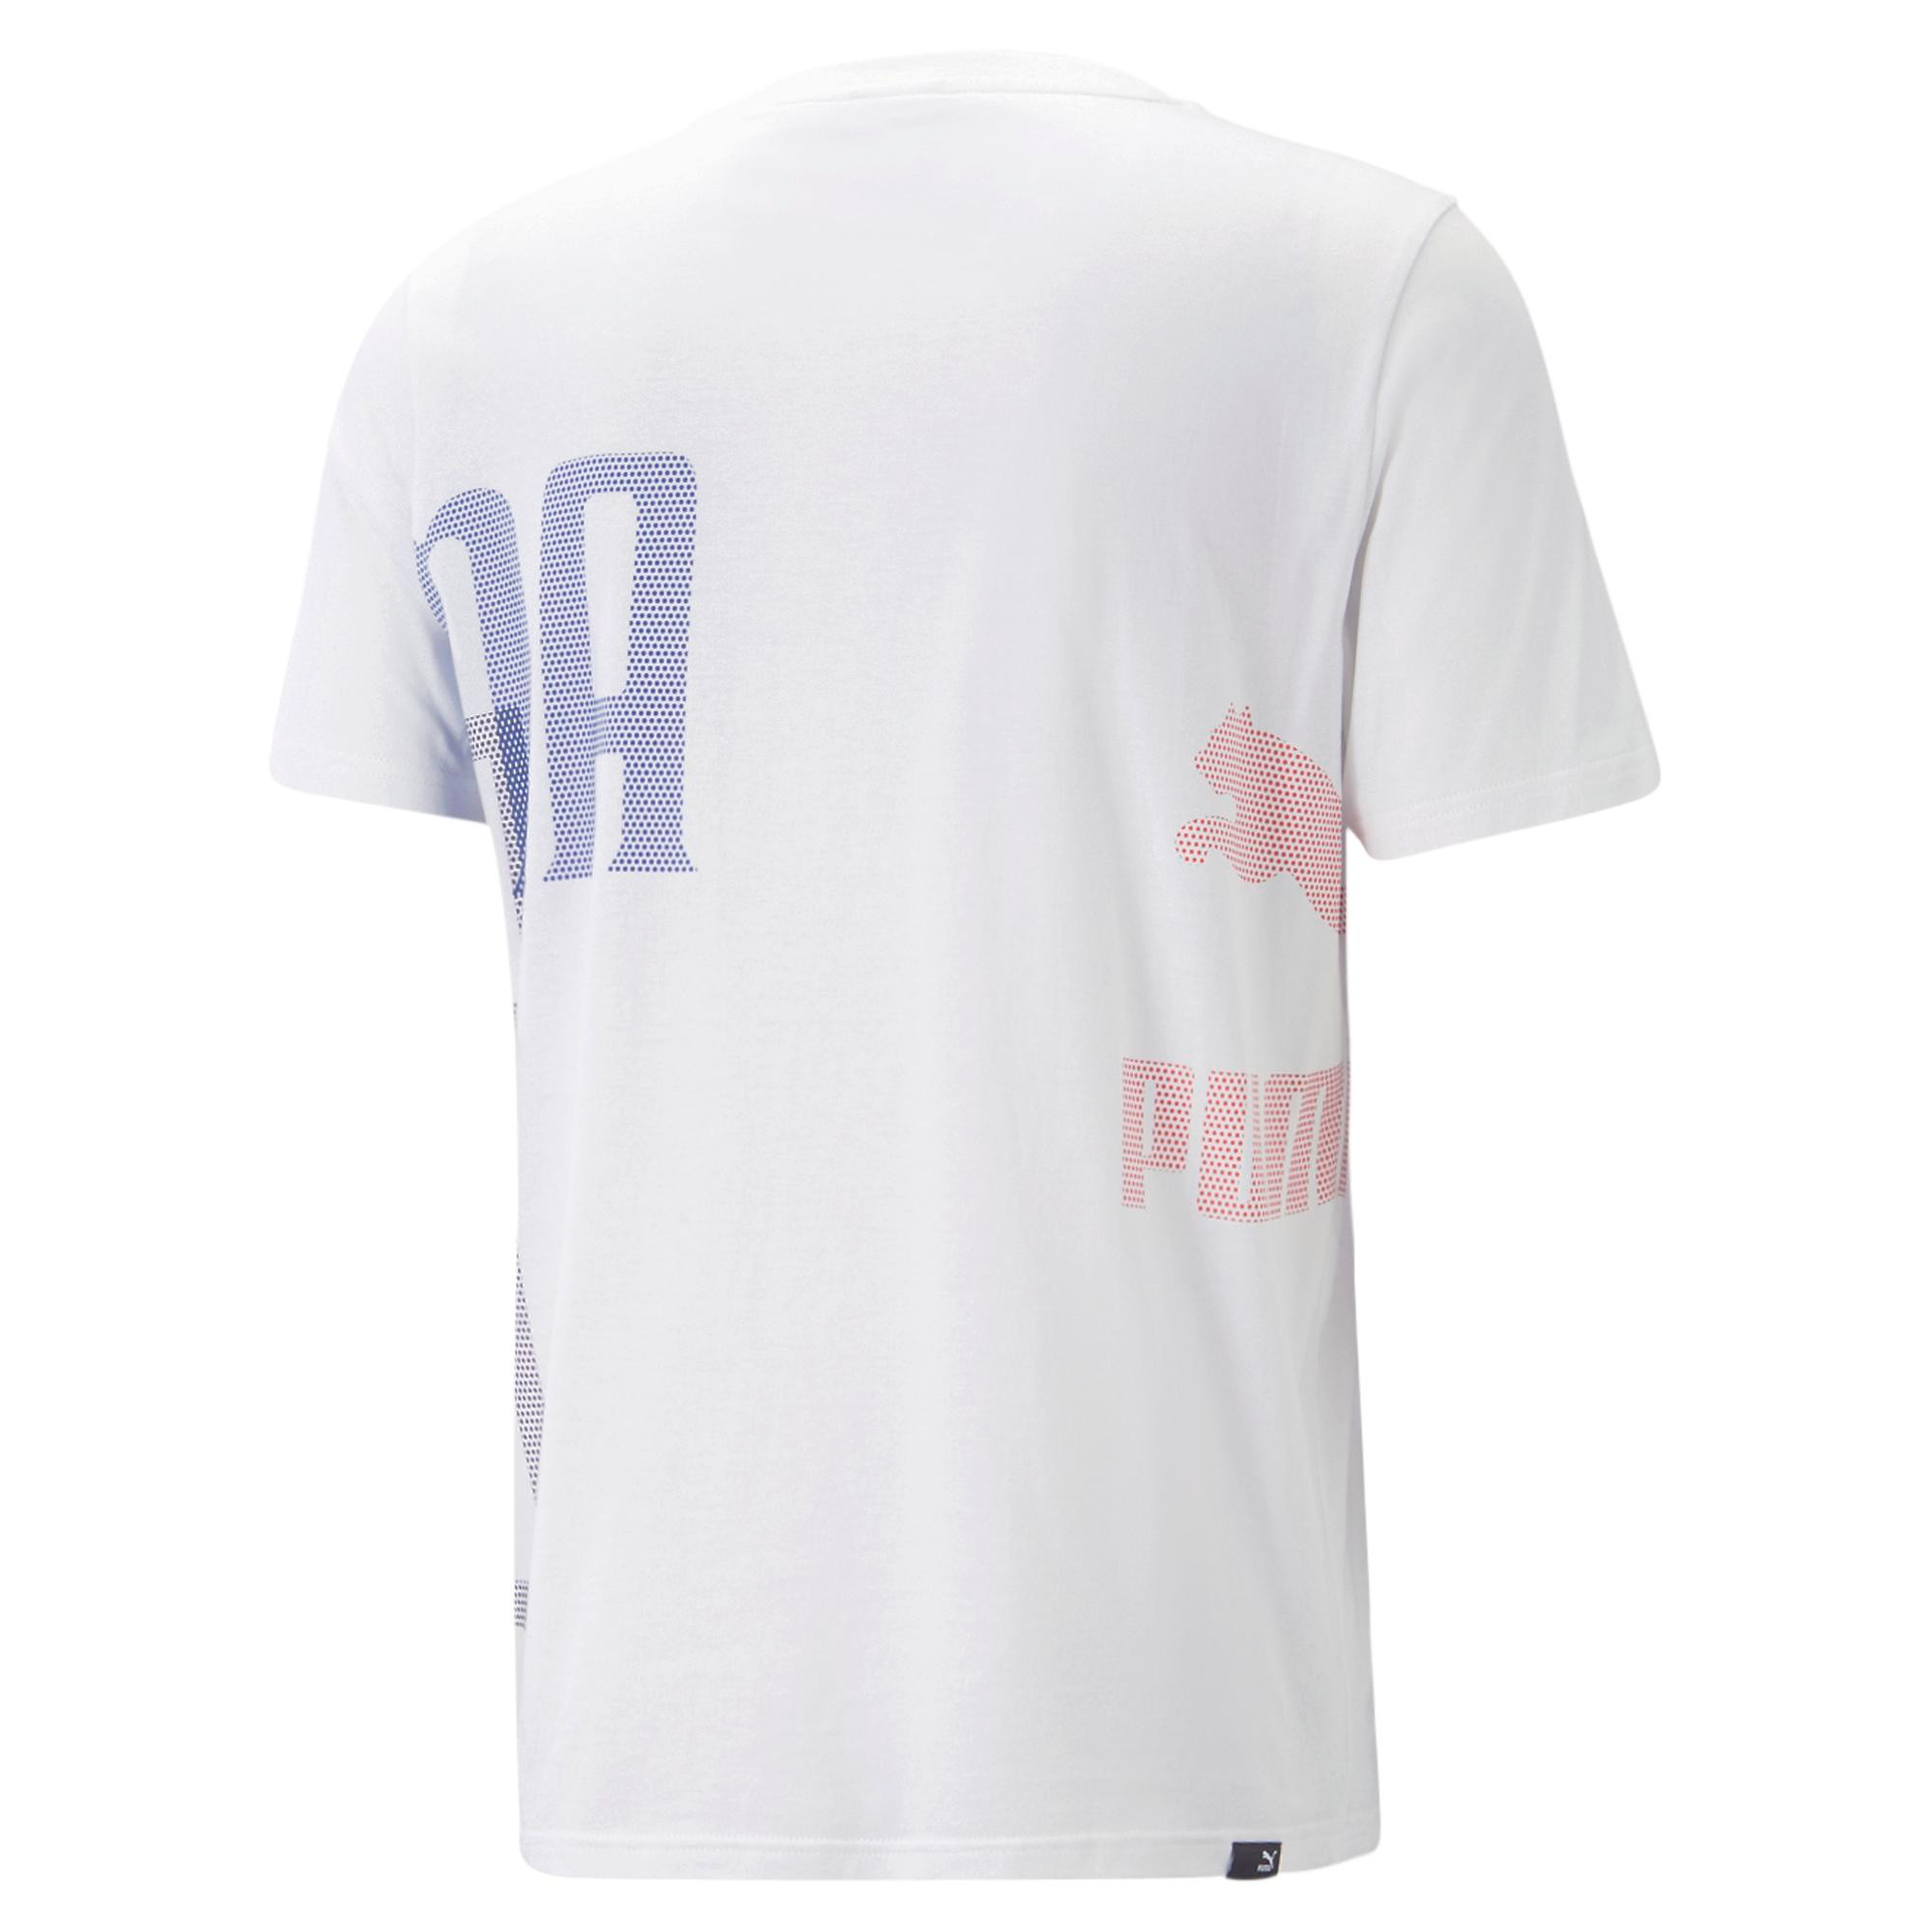 Puma - Cotton T-shirt with logo, White, large image number 1